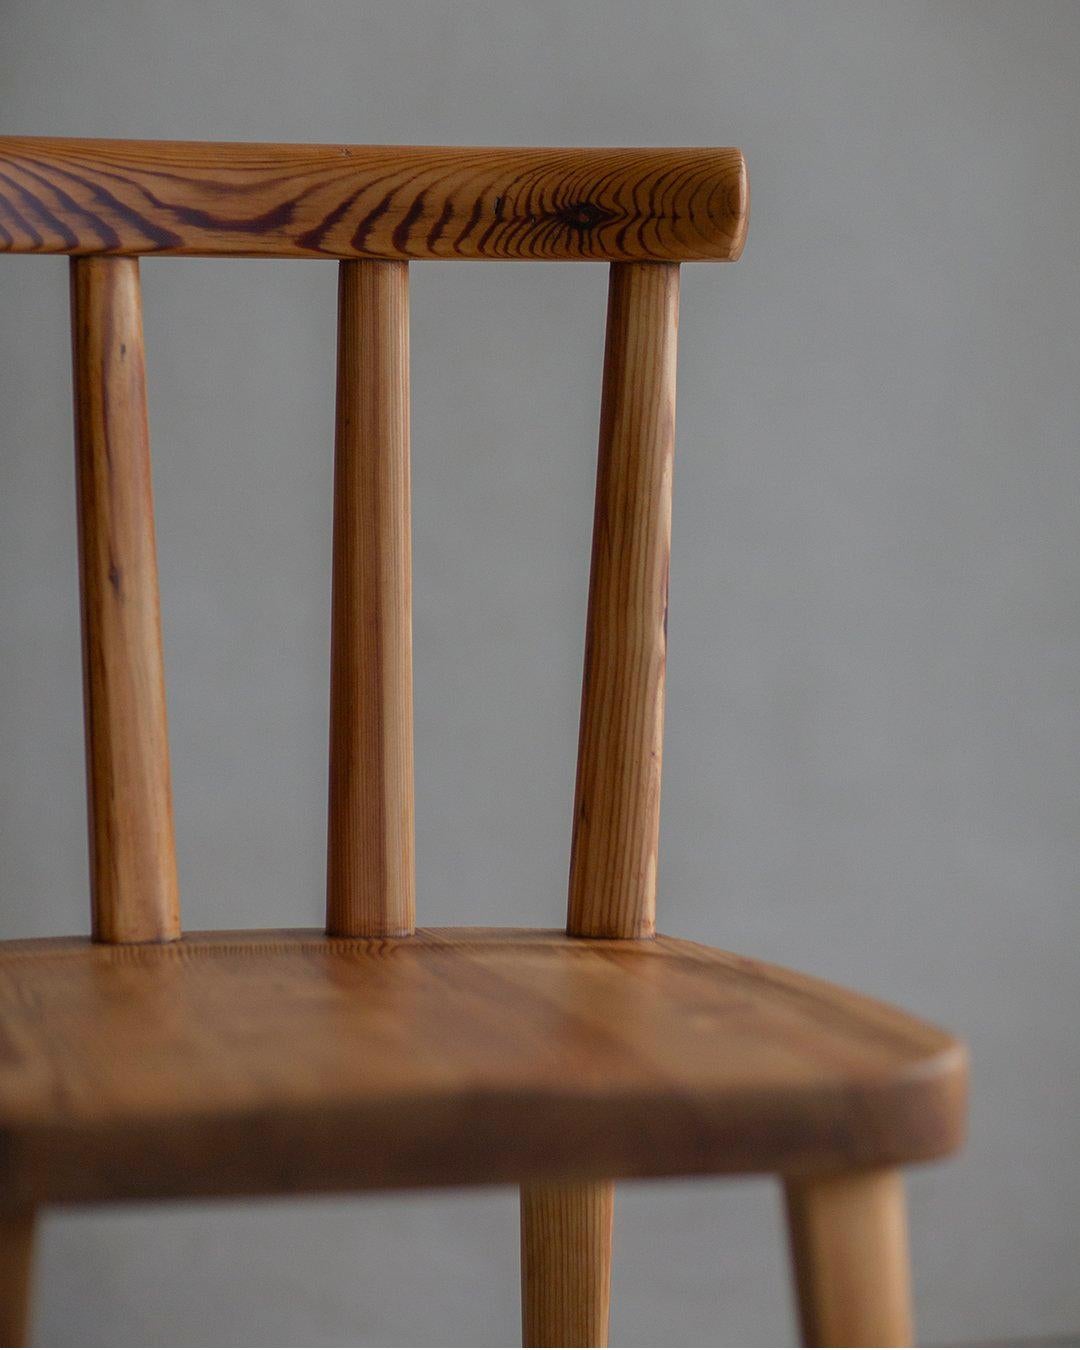 Bois Axel Einar Hjorth - Utö Dining Chair - produit par Nordiska Kompaniet en Suède en vente